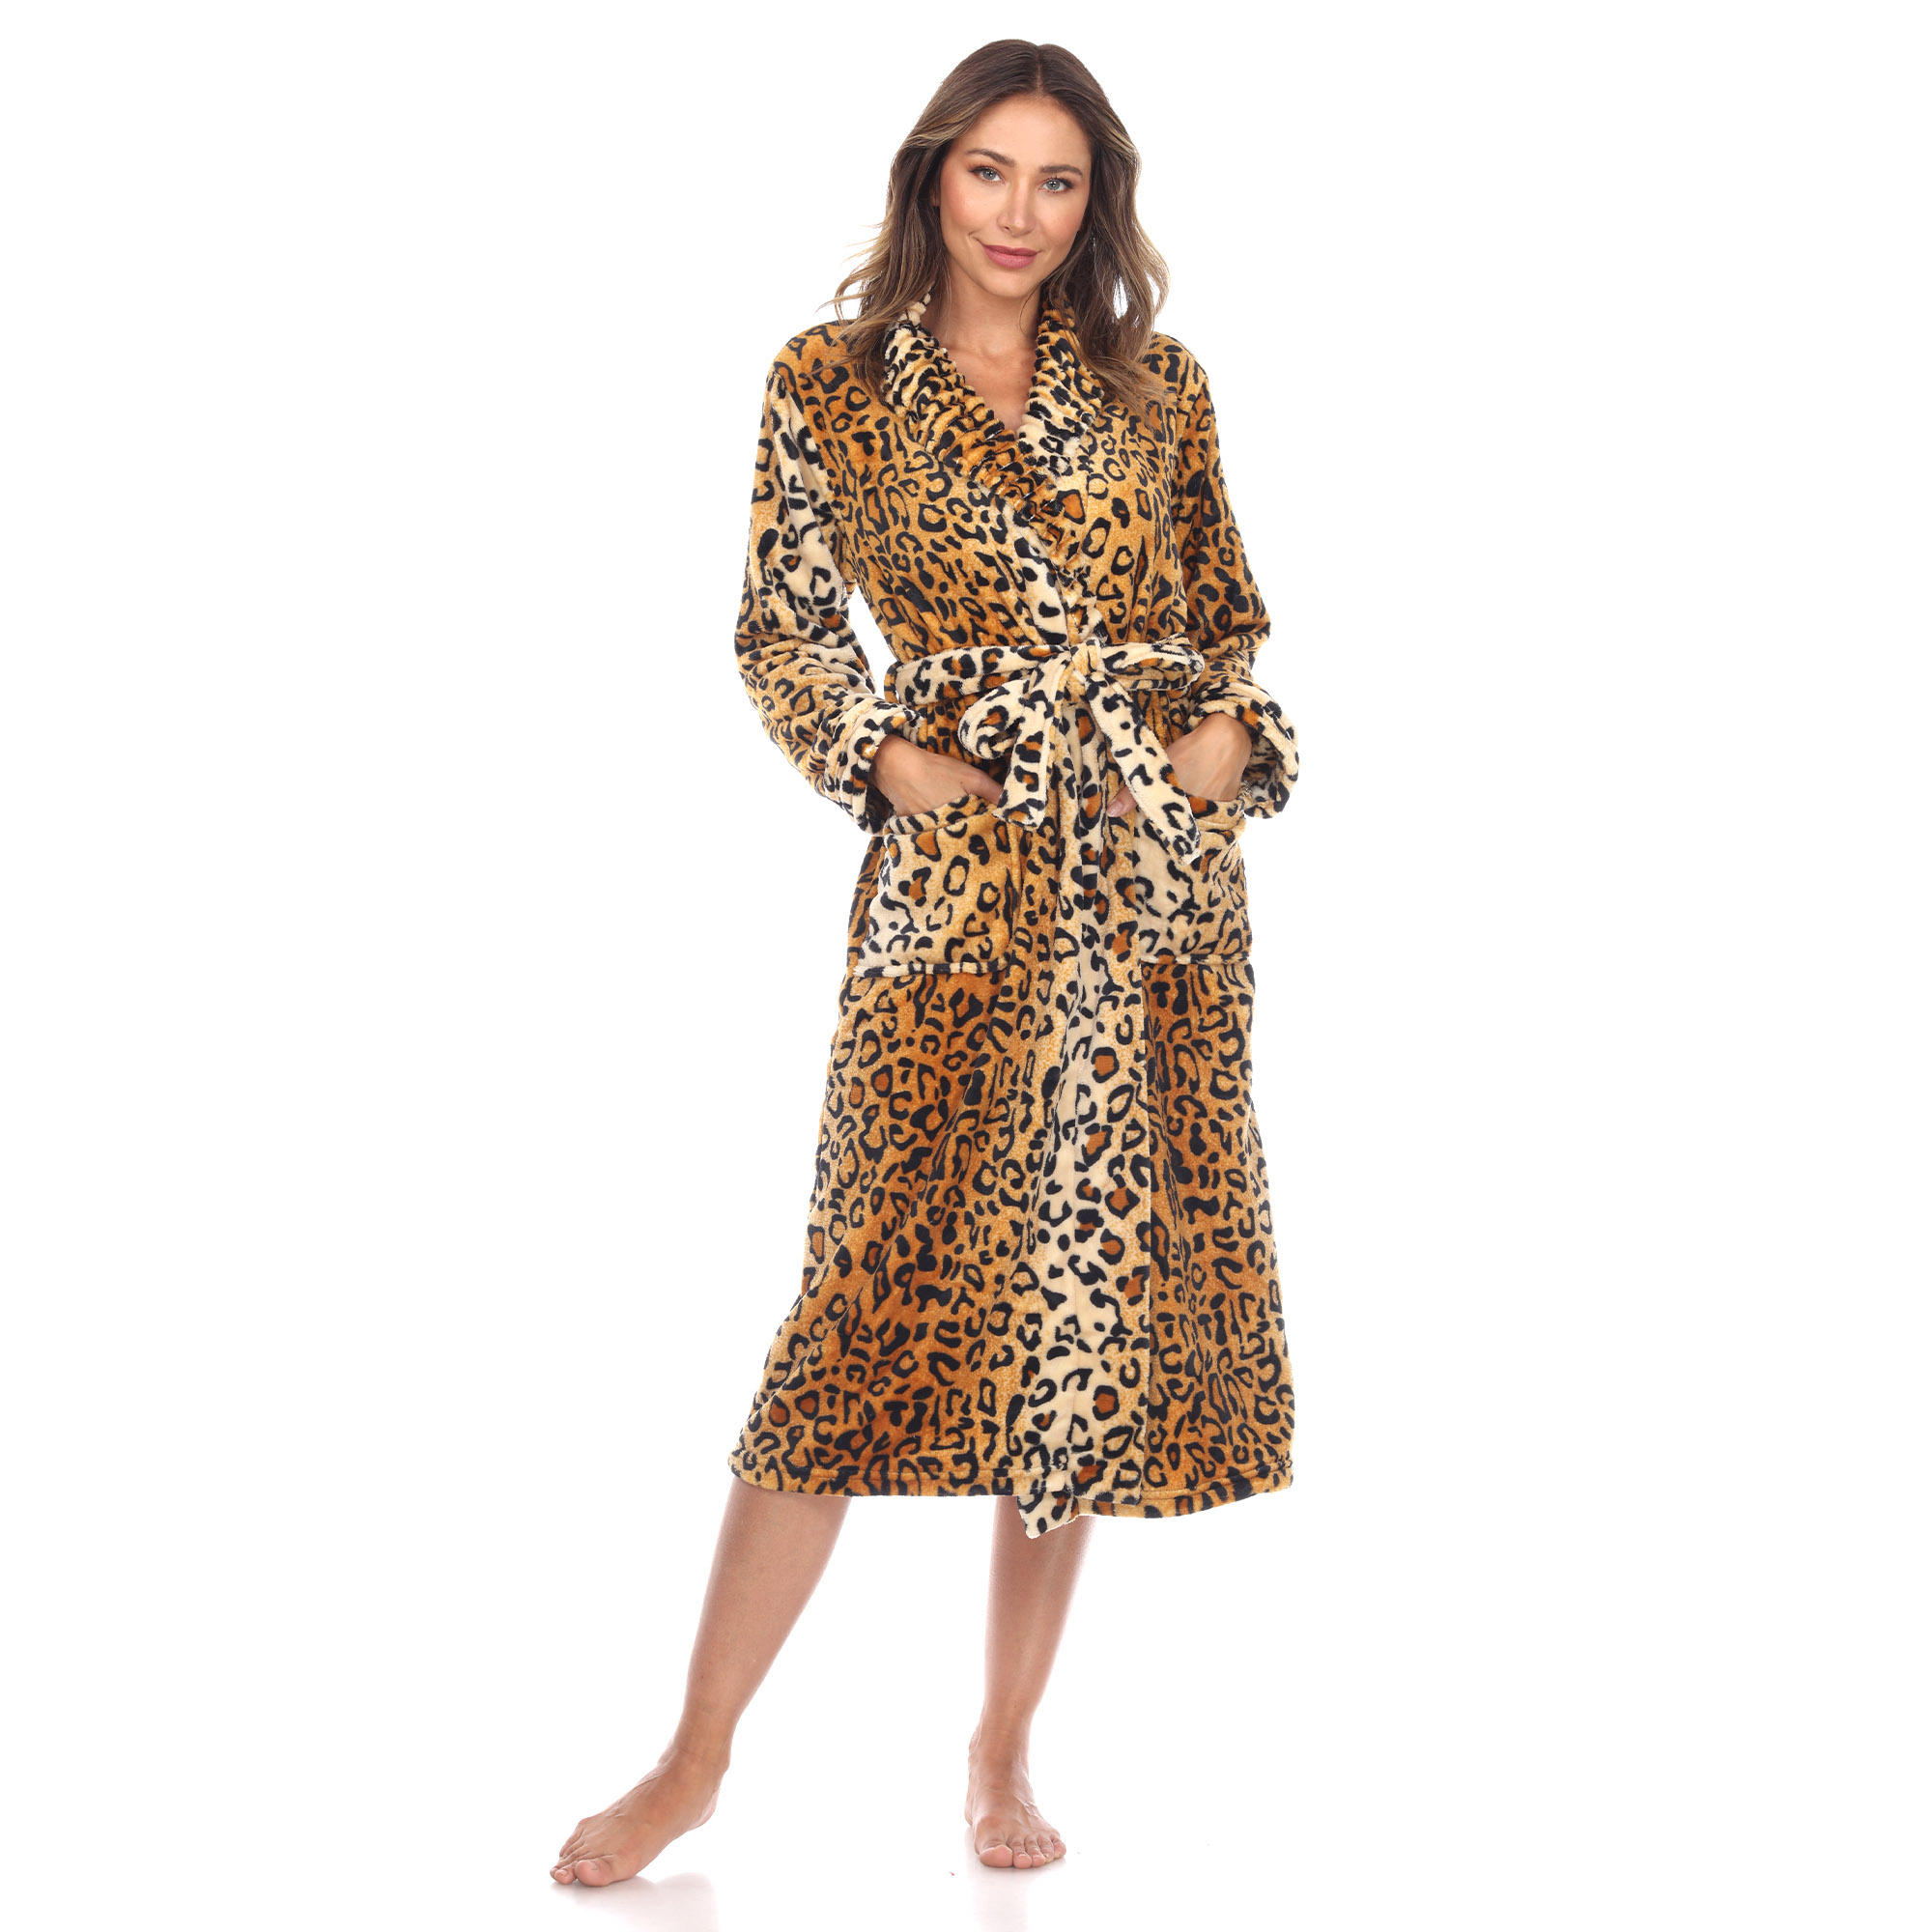 White Mark Women's Cozy Lounge Robe - Brown Leopard, S/M